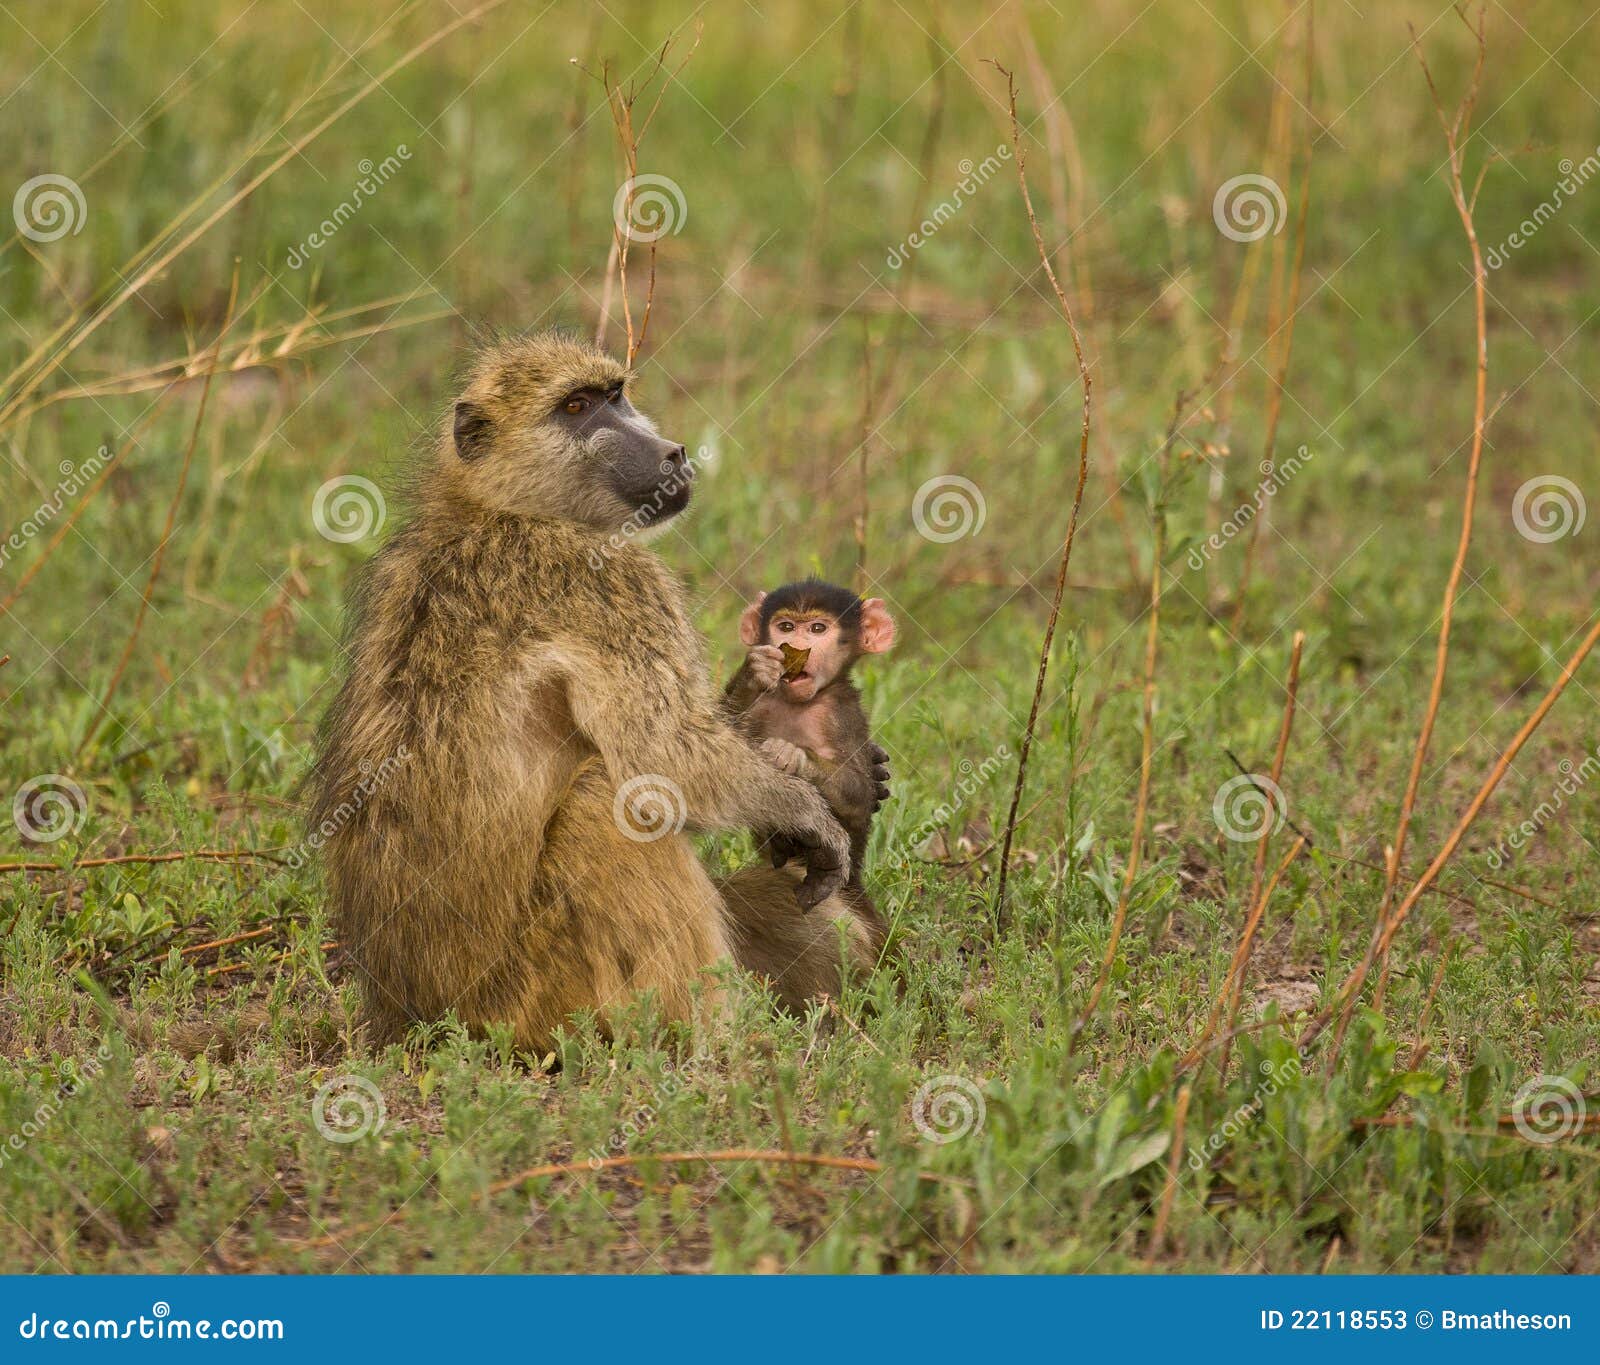 Baboon φύλλο chacma μωρών. 4 100 baboons σύνδεσαν το αφιερωμένο cynocephalus θηλυκό chacma ομαδοποιούν σκληρά κοινωνικό το τους papio μητέρων διαβίωσης ατόμων στο ursinus πολύ νέο